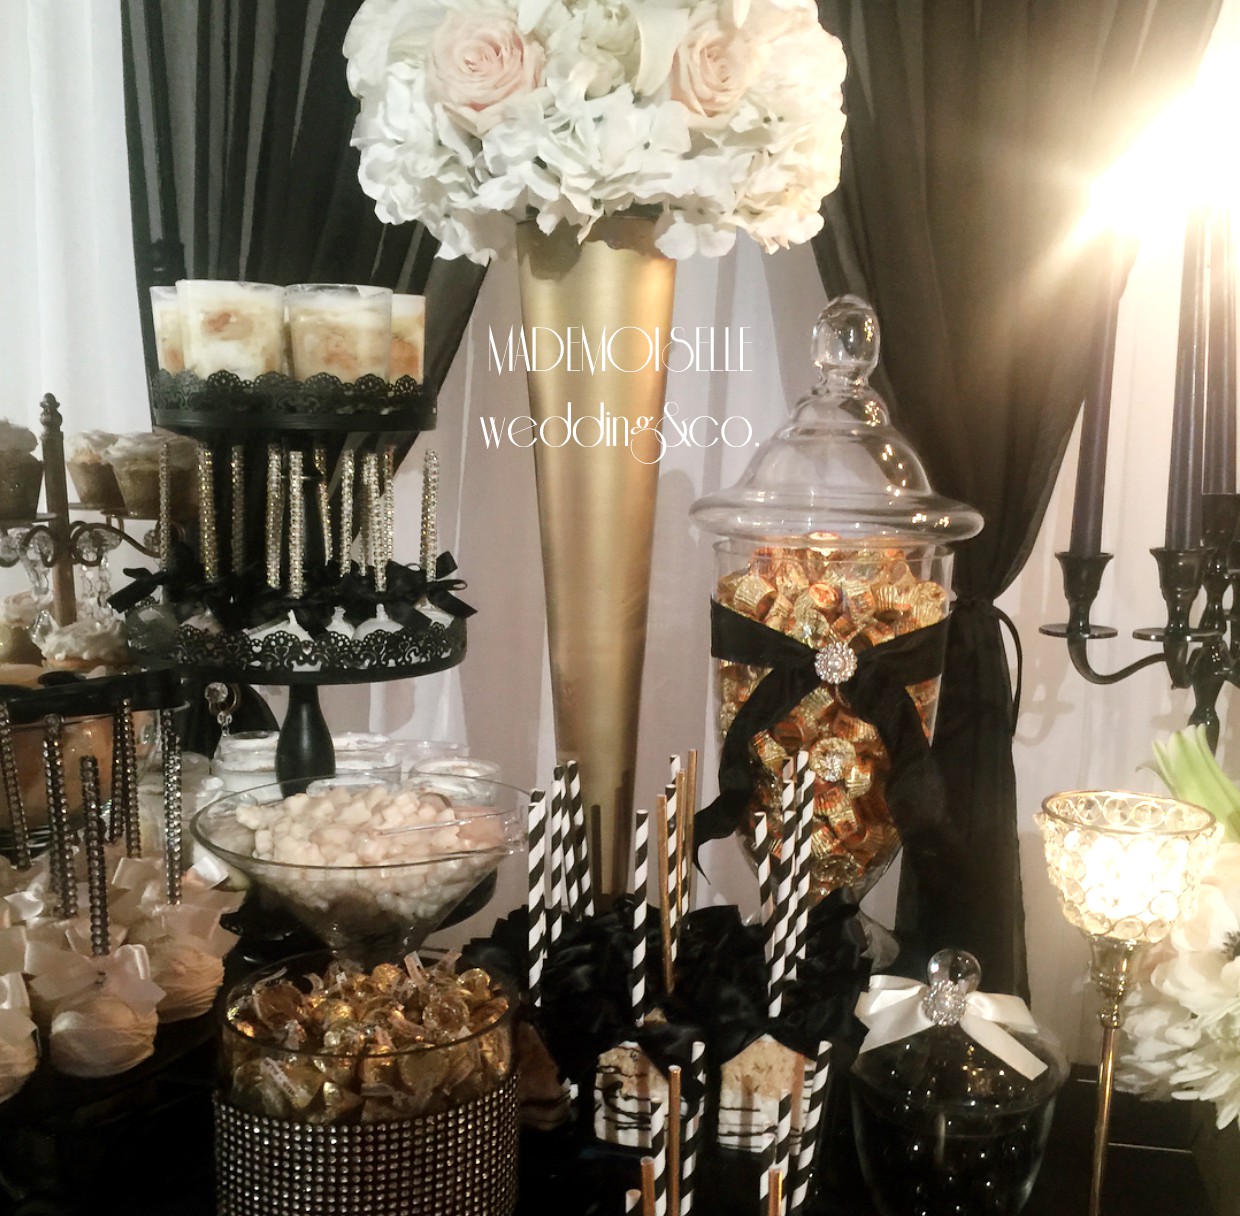 Slatki sto-dekoracija za slatki sto-dekoracija slatkog stola-kolaci-cupecakes-crno zlatna dekoracija slatkog stola-muffins-cakepops-dekoracija krstenja-radujevac-negotin